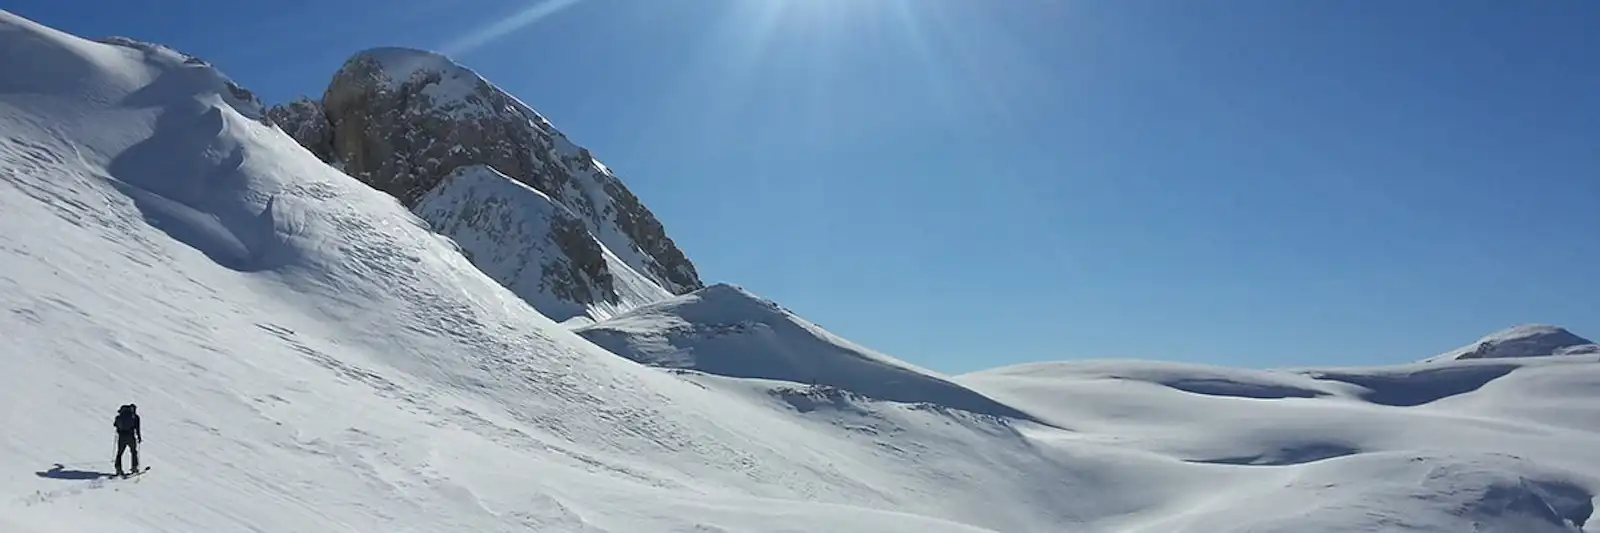 Ski touring in Mount Triglav National Park: 4 days off the beaten tracks! post image